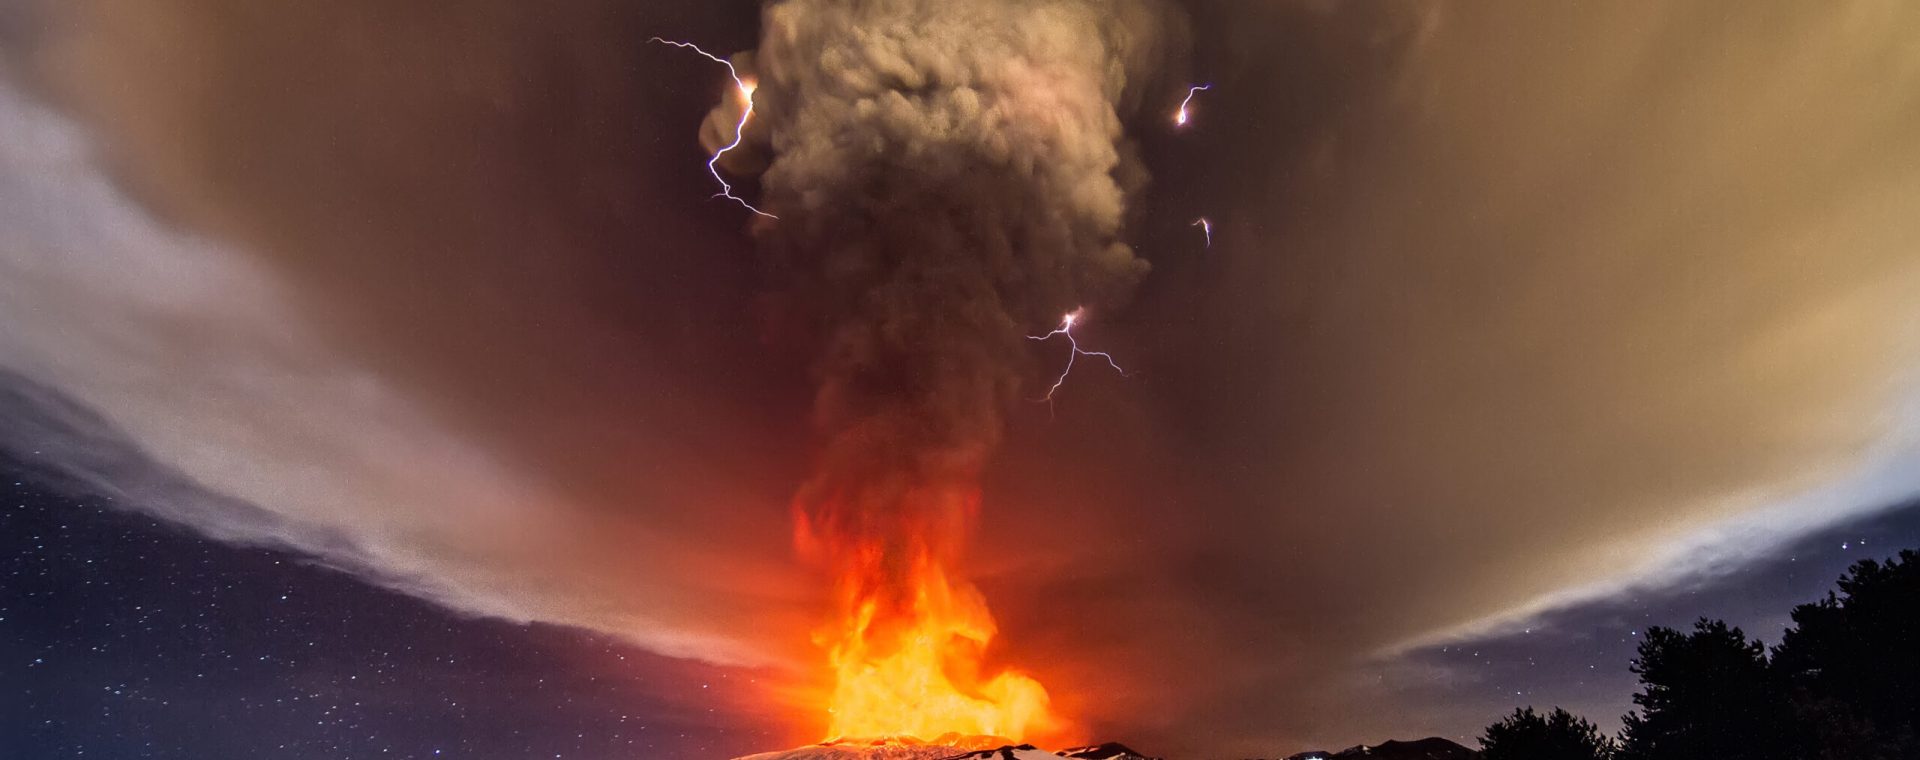 Dirty thunderstorm - Etna